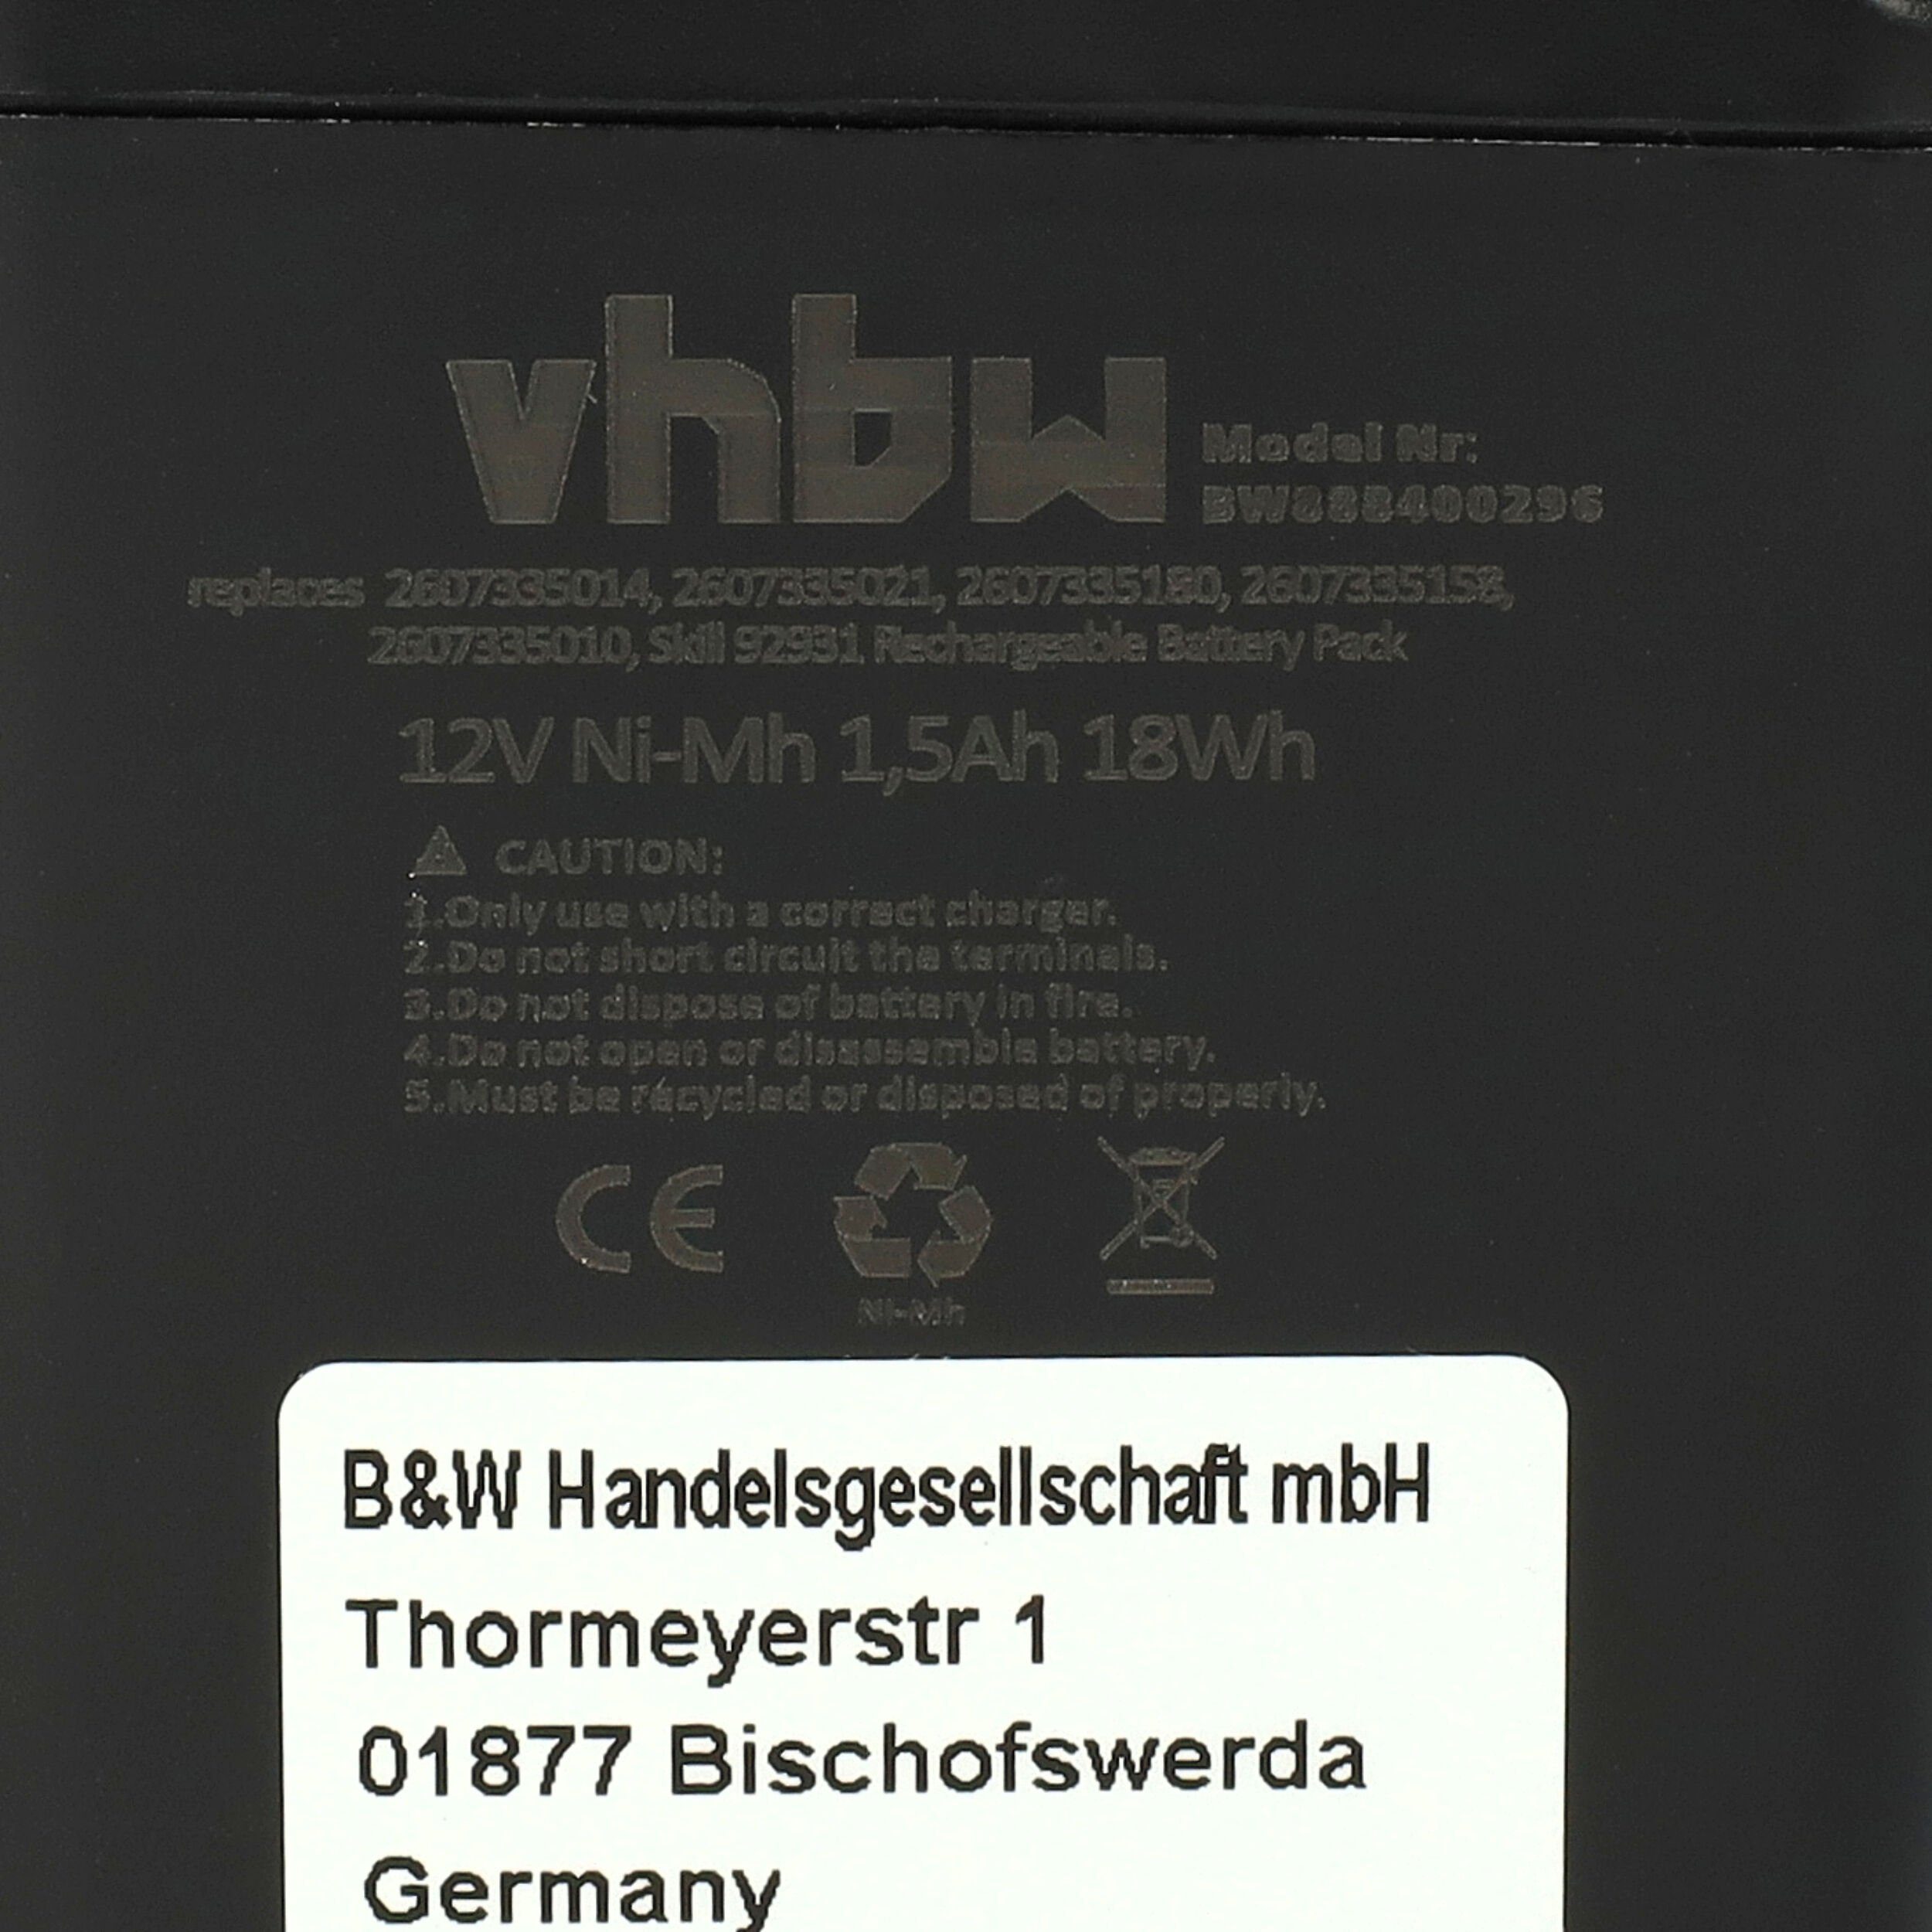 vhbw kompatibel V) BHC2300 mAh mit NiMH Akku (12 Signode 1500